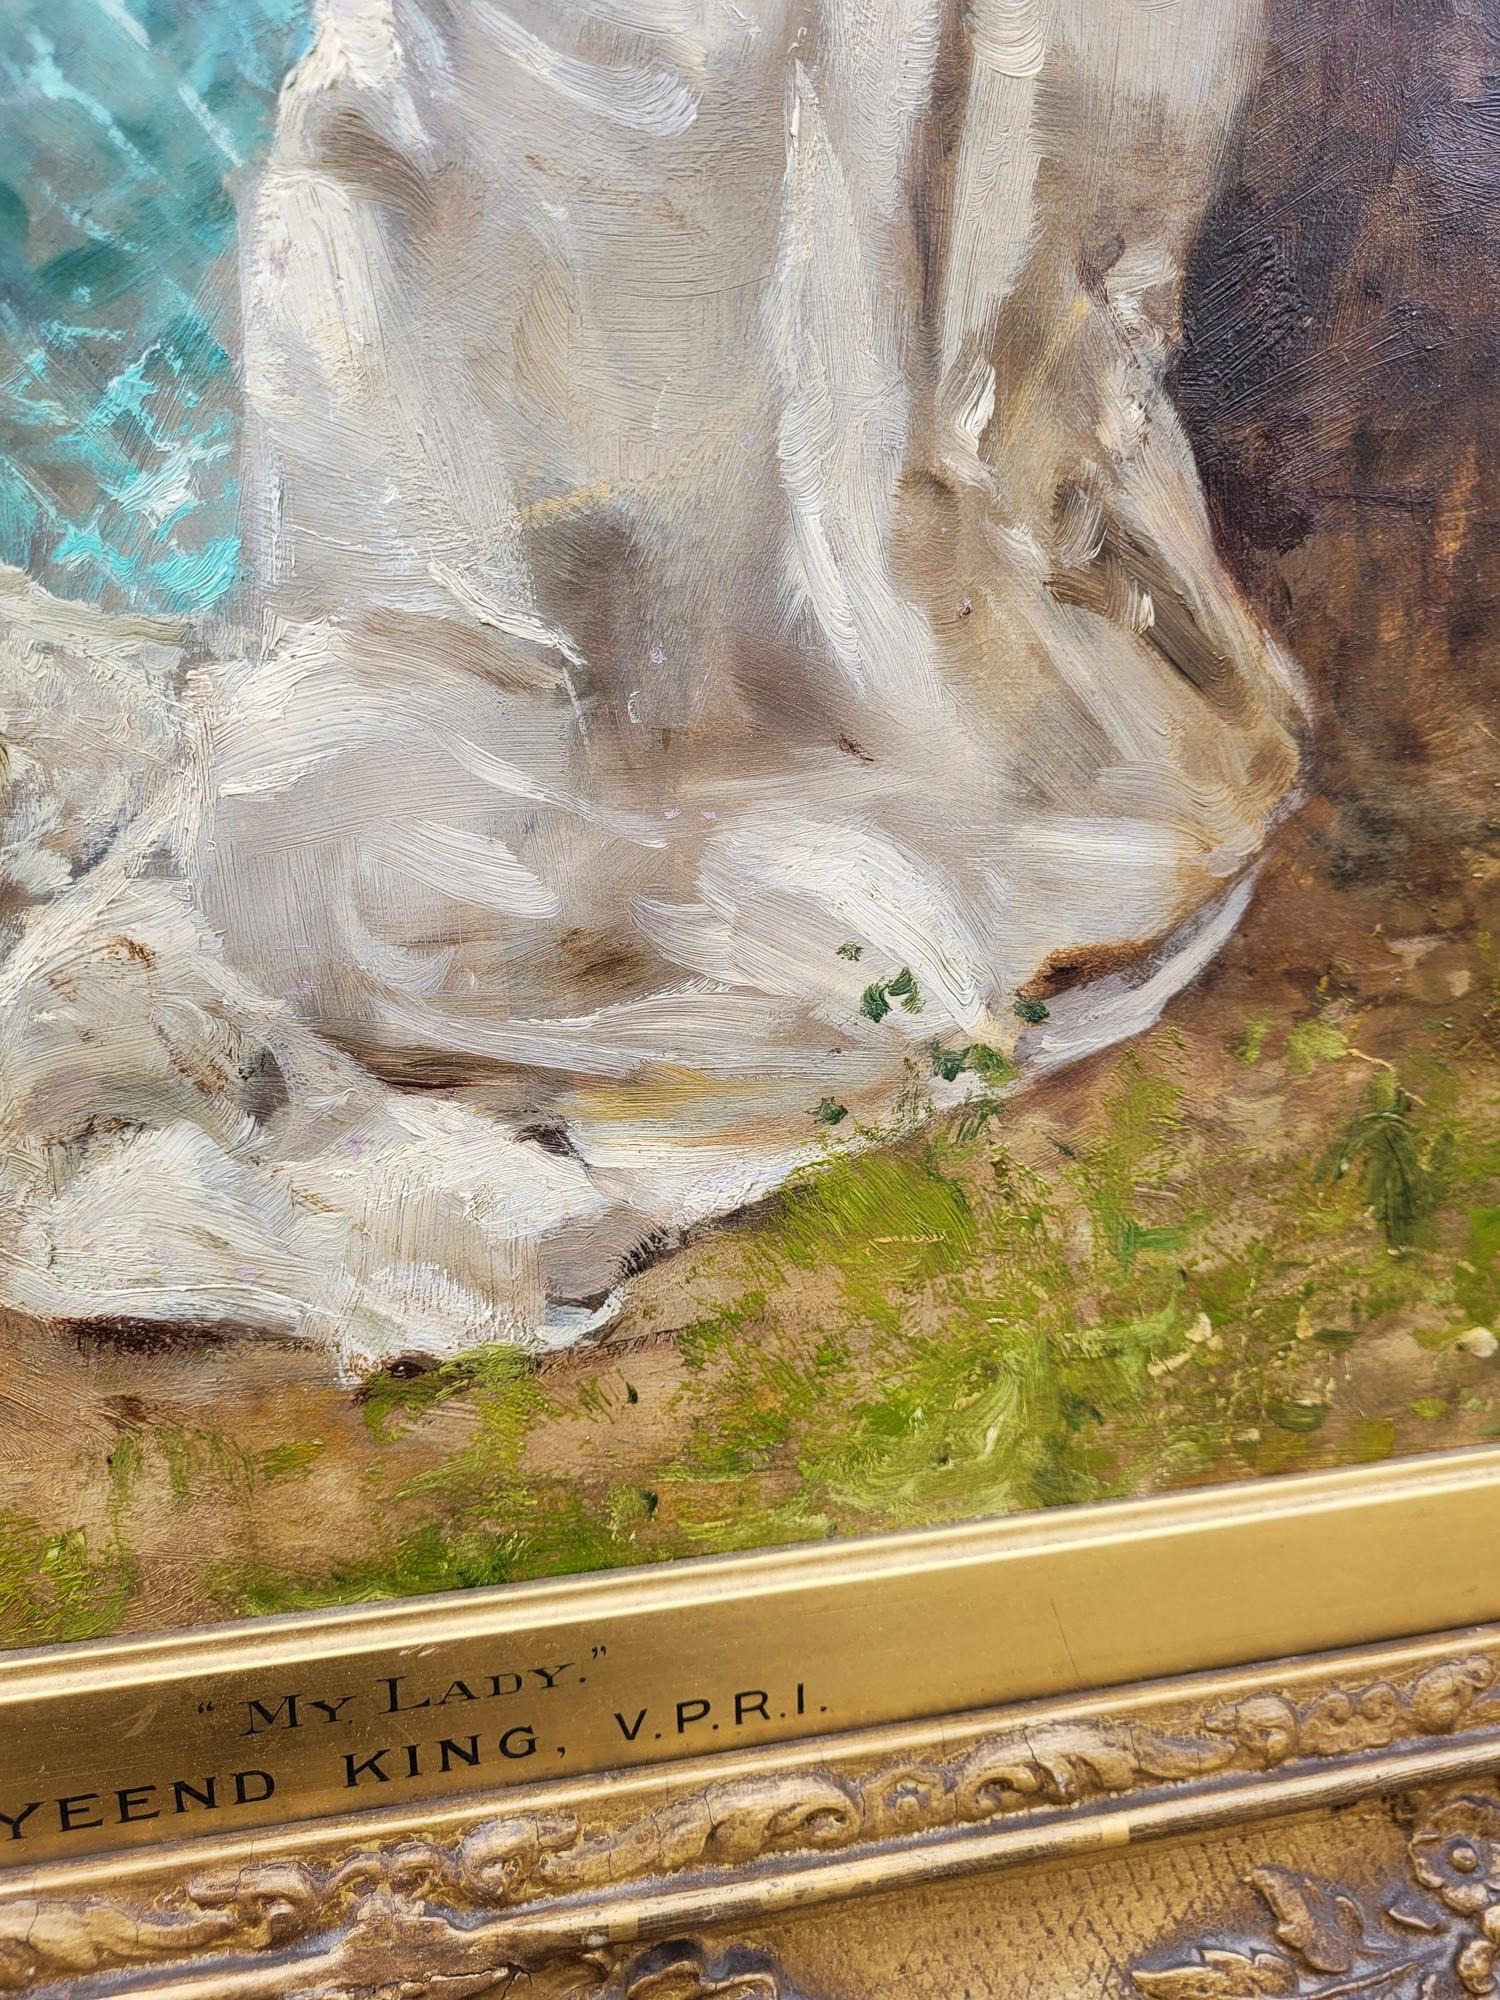 Yeend King, My Lady, Öl auf gerahmter Leinwand, 19. Jahrhundert im Angebot 6